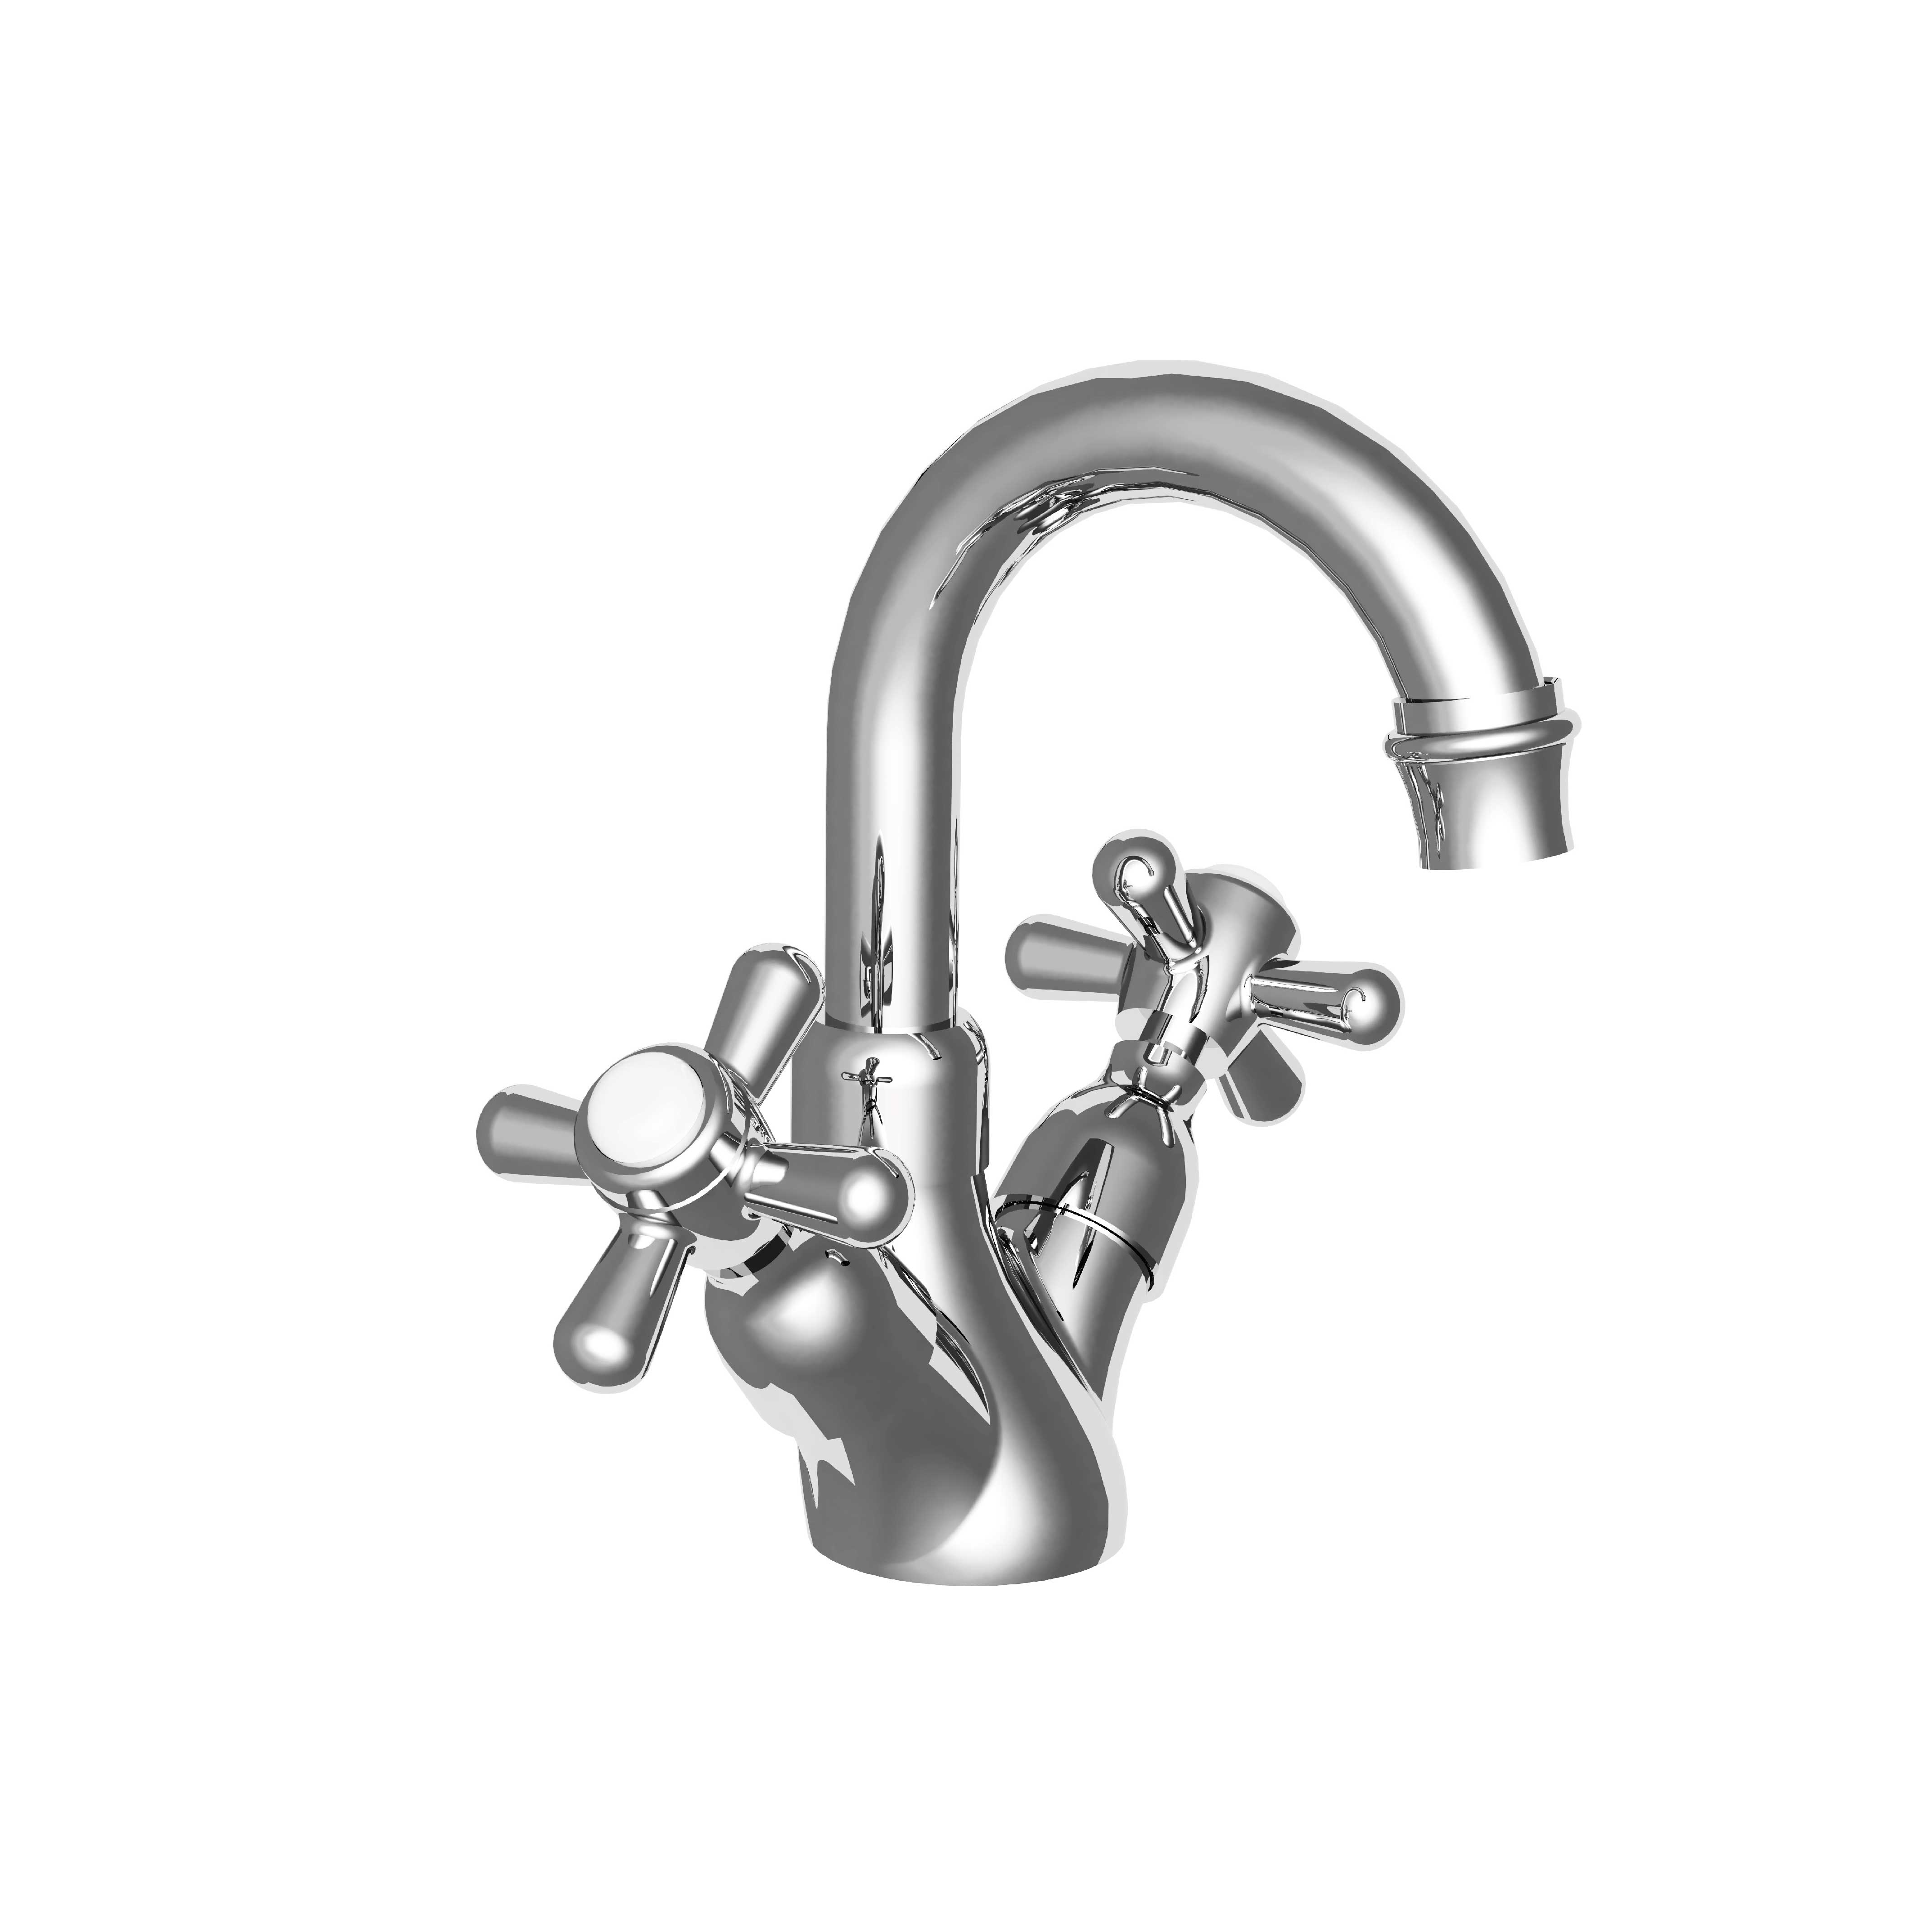 M40-4102 Single-hole wash-hand basin mixer